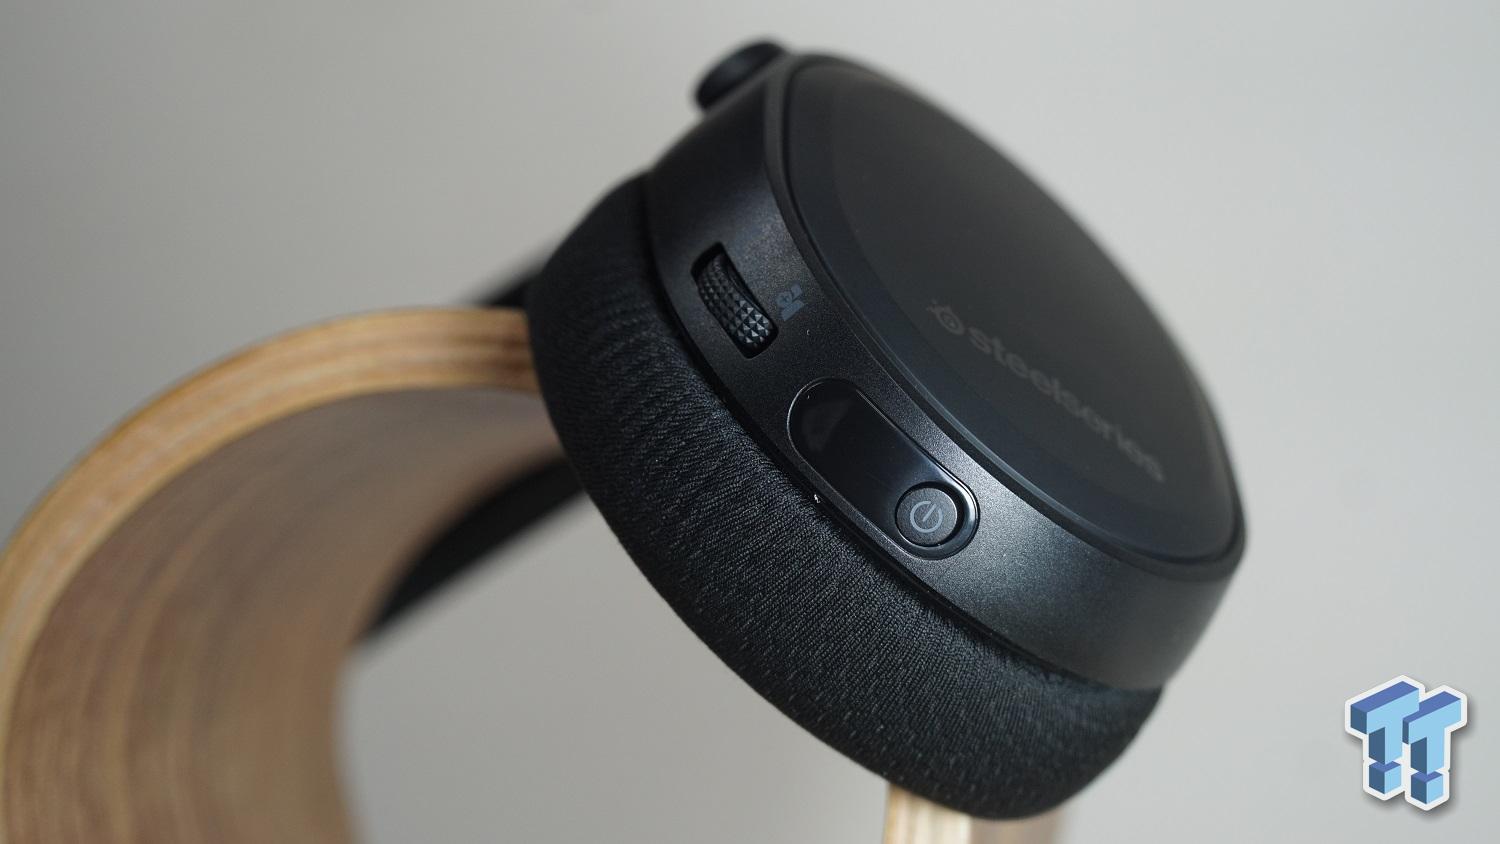 SteelSeries Arctis 7 Wireless 7.1 Surround Sound Headset Review – Techgage